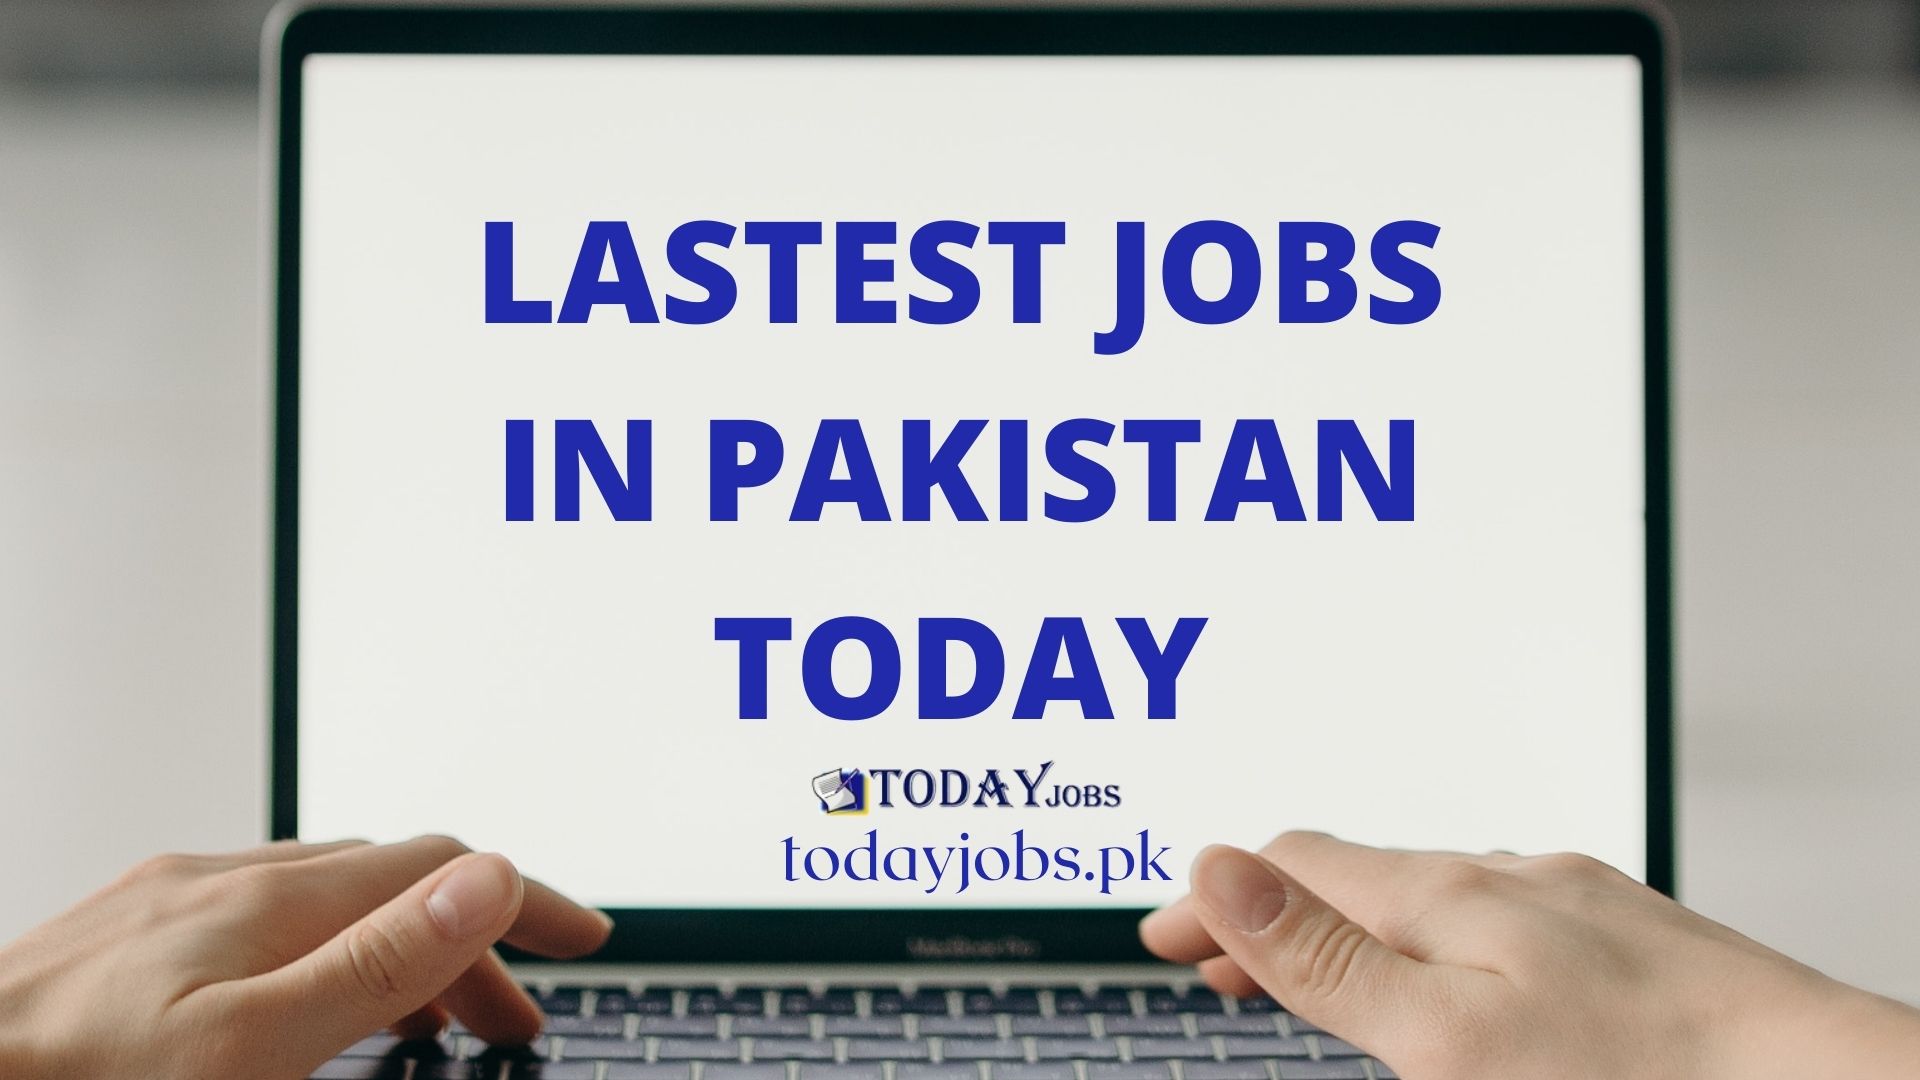 Latest Jobs in Pakistan today